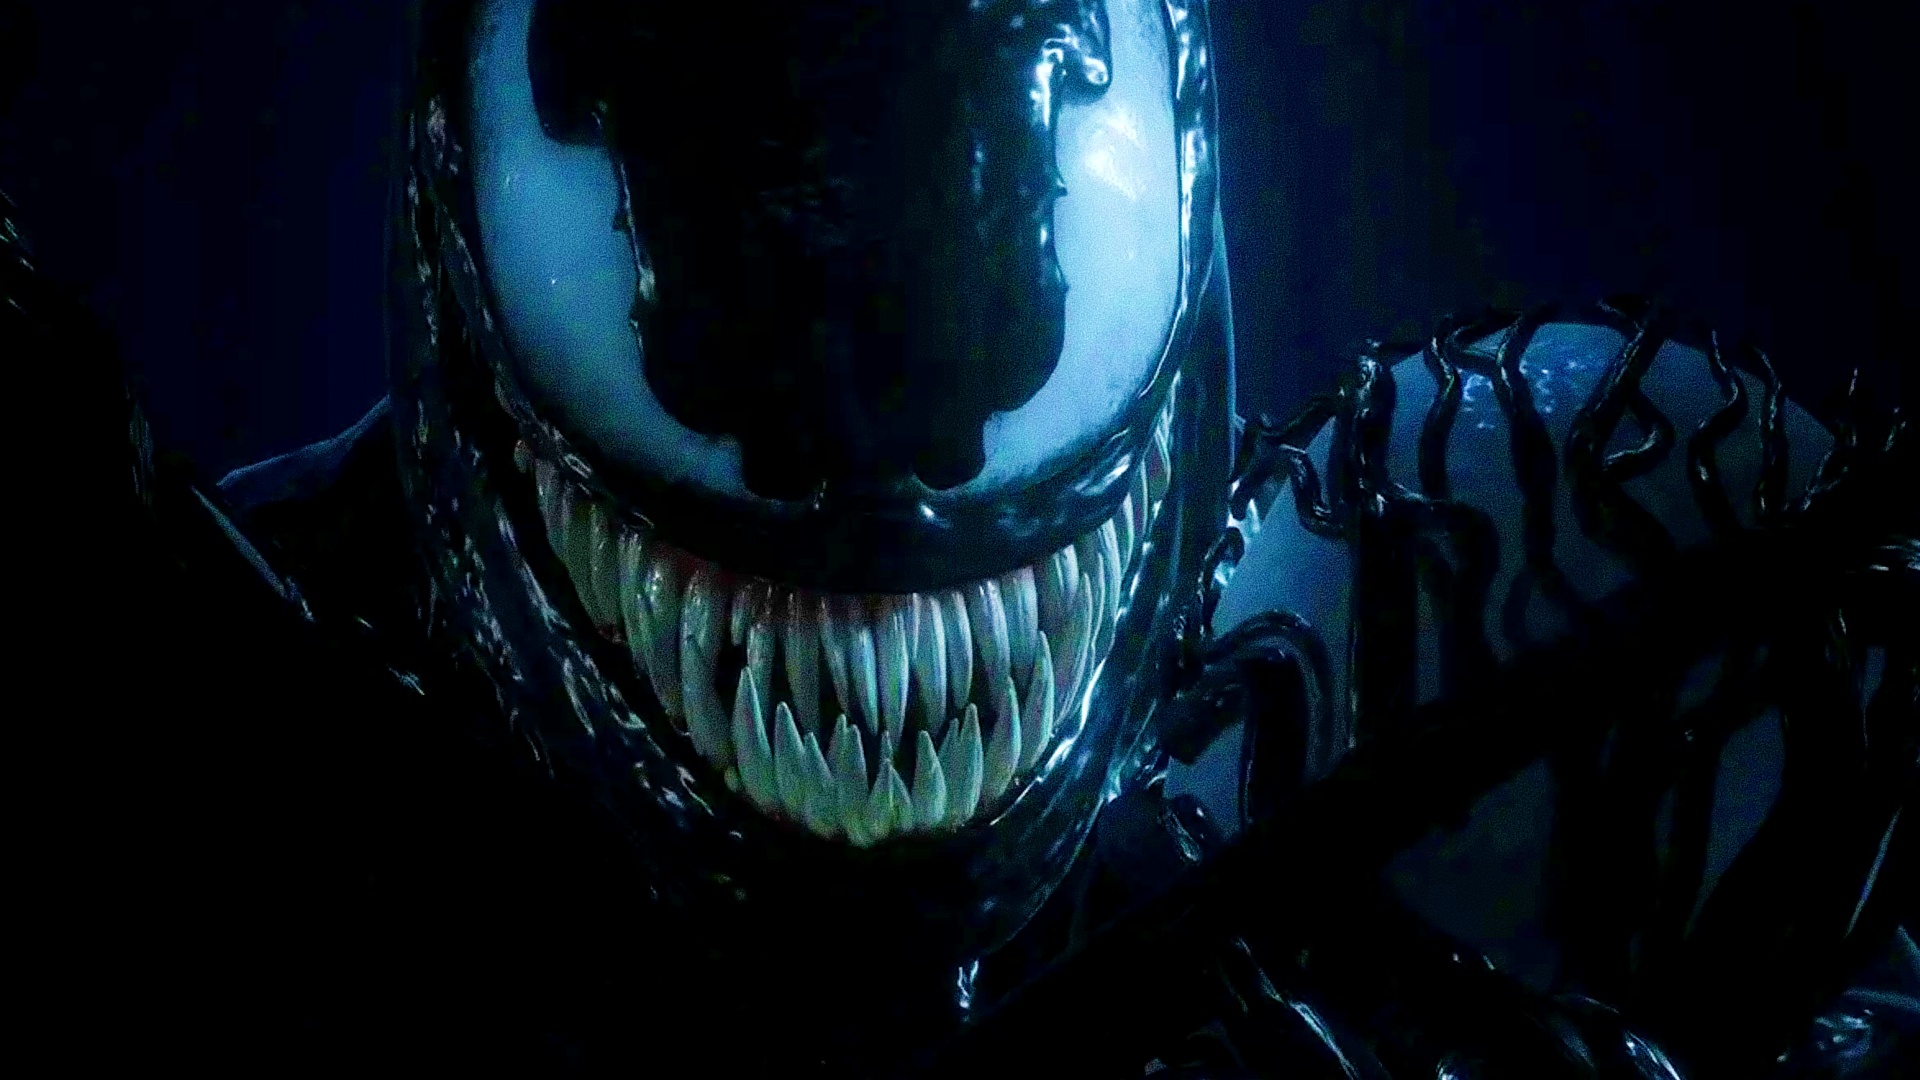 Tony Todd Discusses His Unique Take on Venom in SPIDER-MAN 2